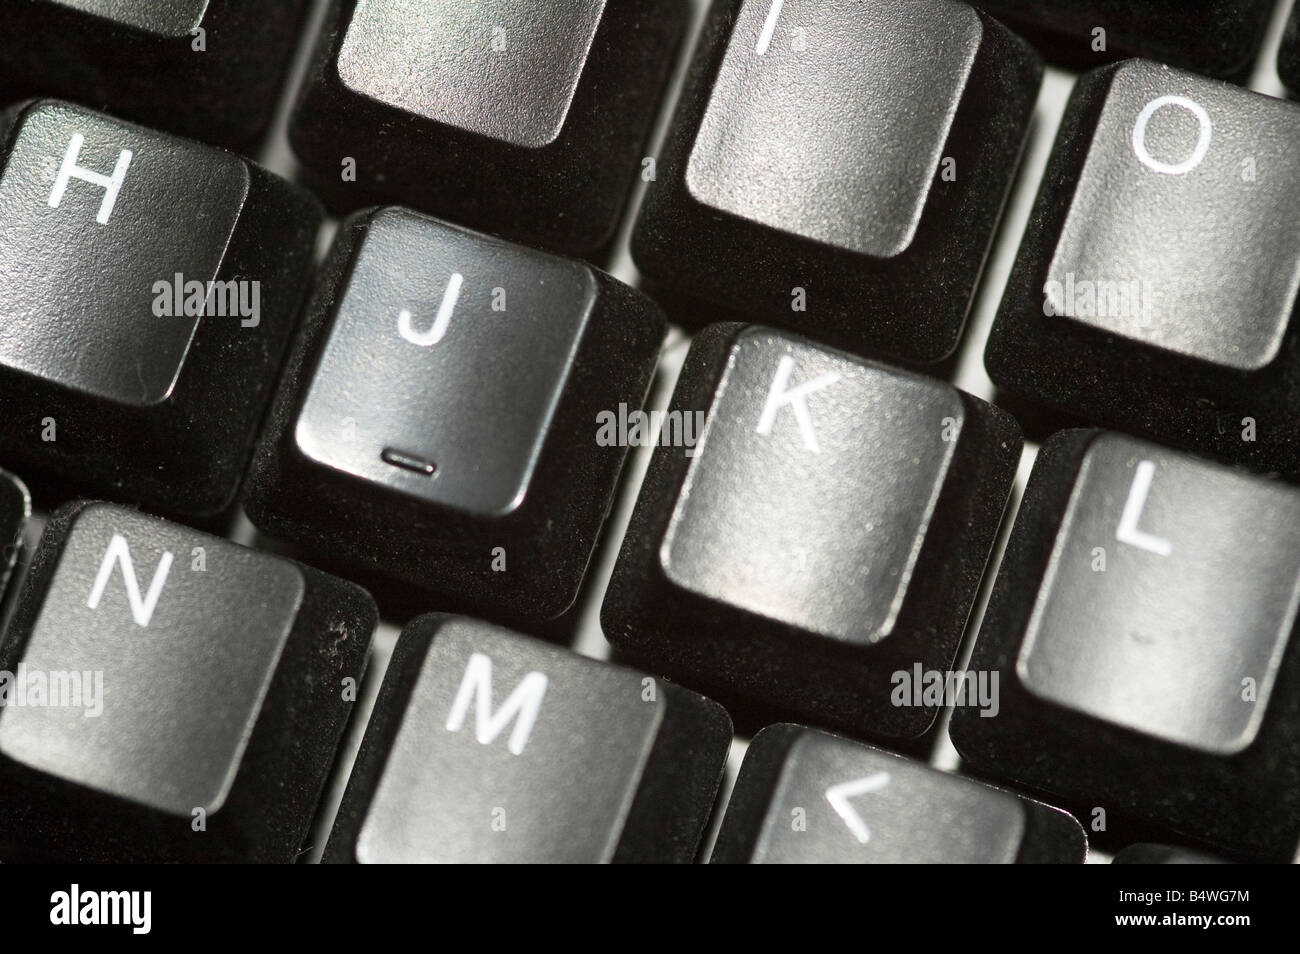 A computer keyboard Stock Photo